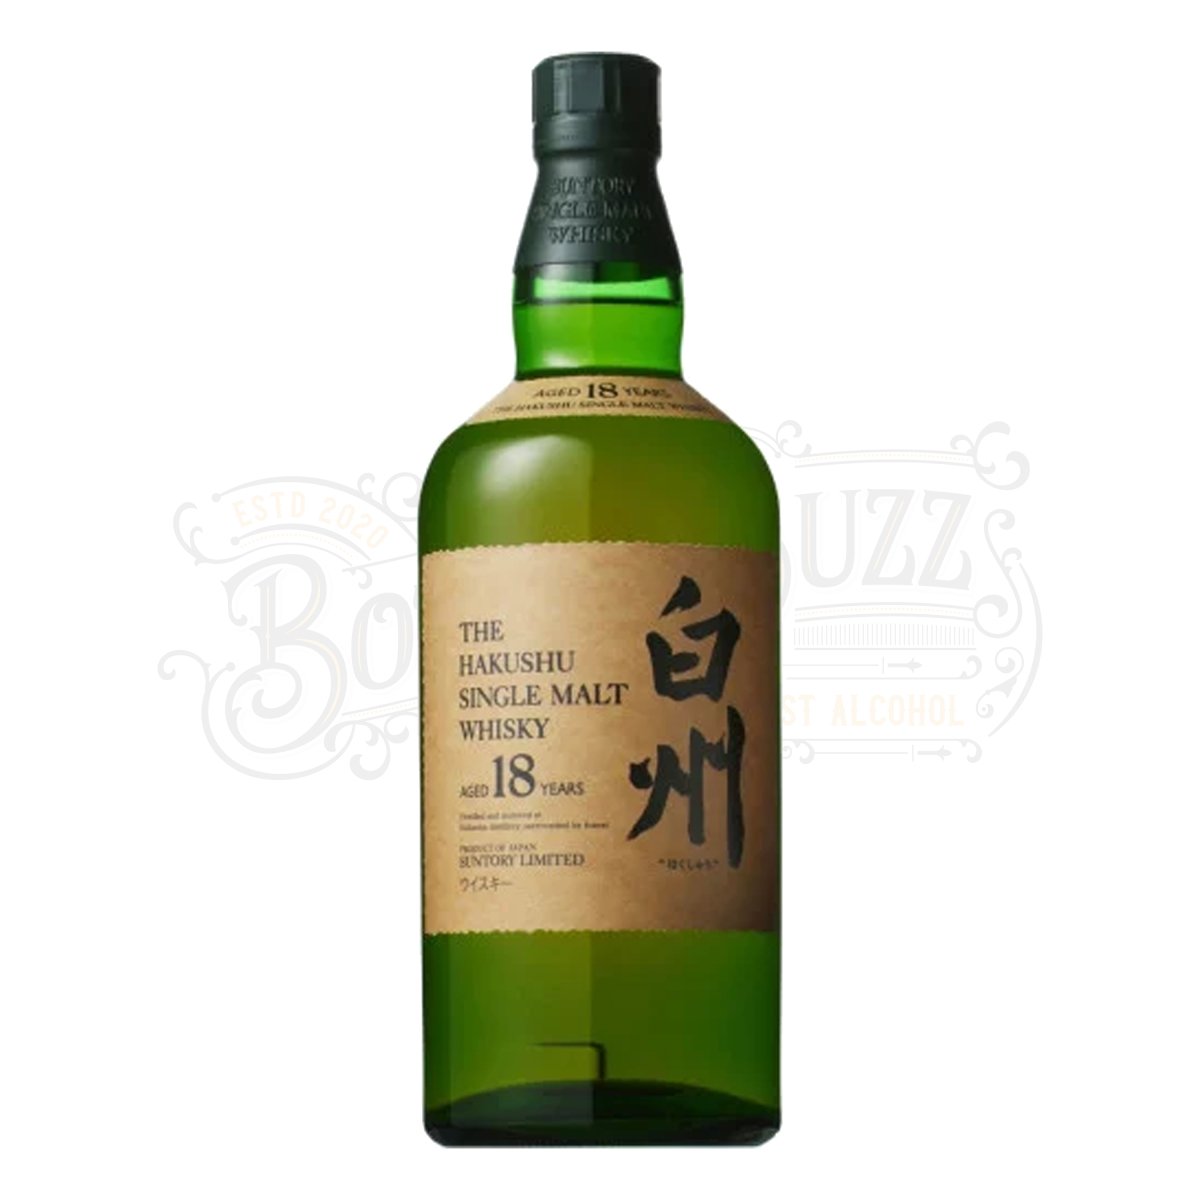 Japanese/Foreign - BottleBuzz